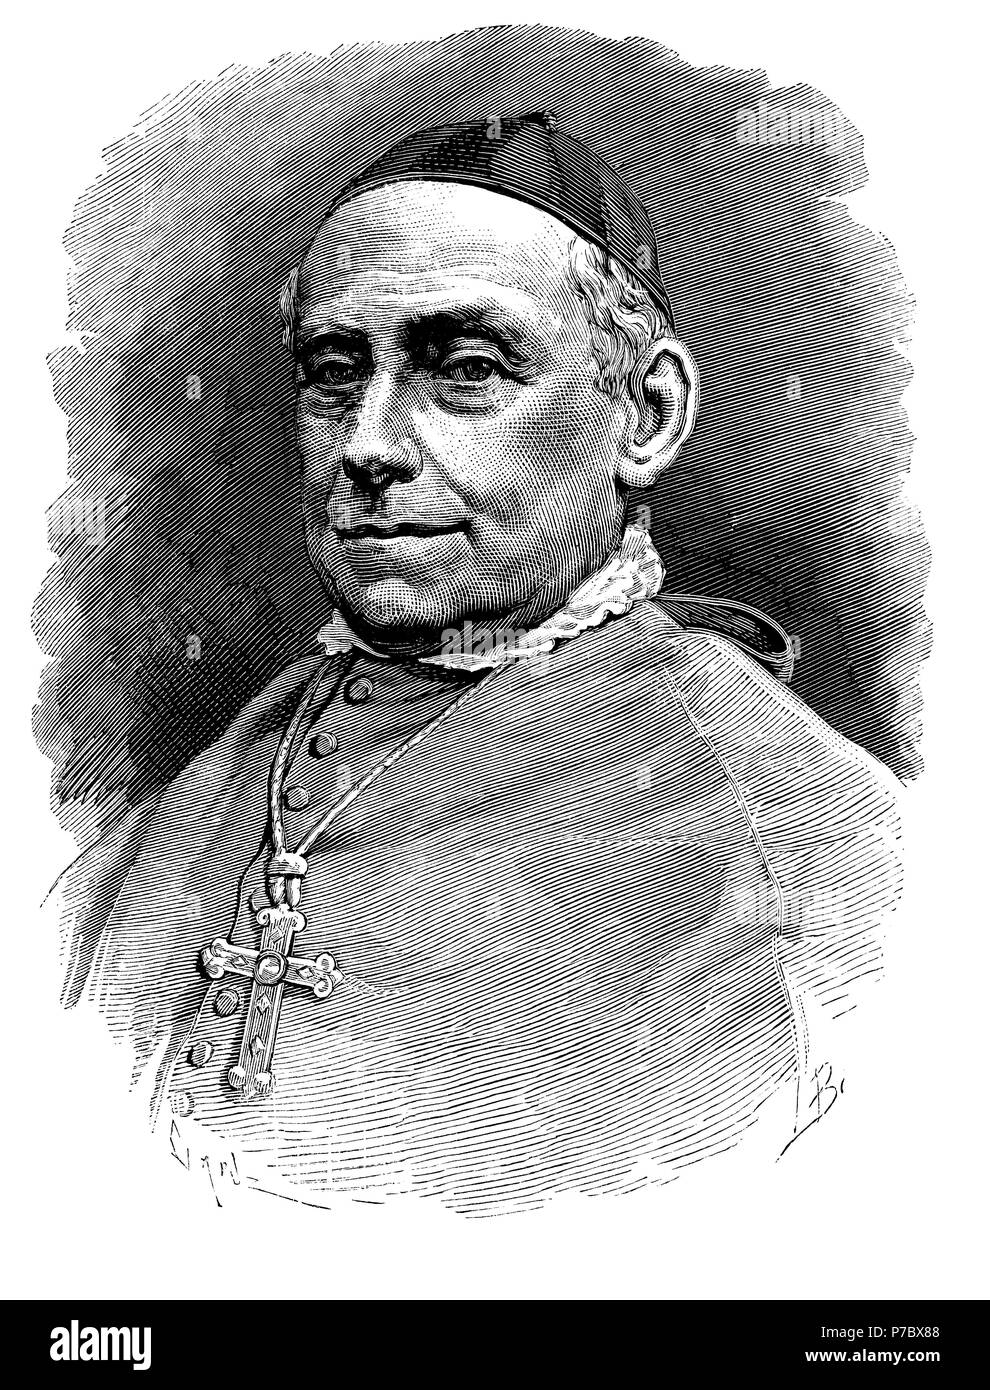 Urquinaona Bidot, José María (1813-1883), prelado español, obispo de ...